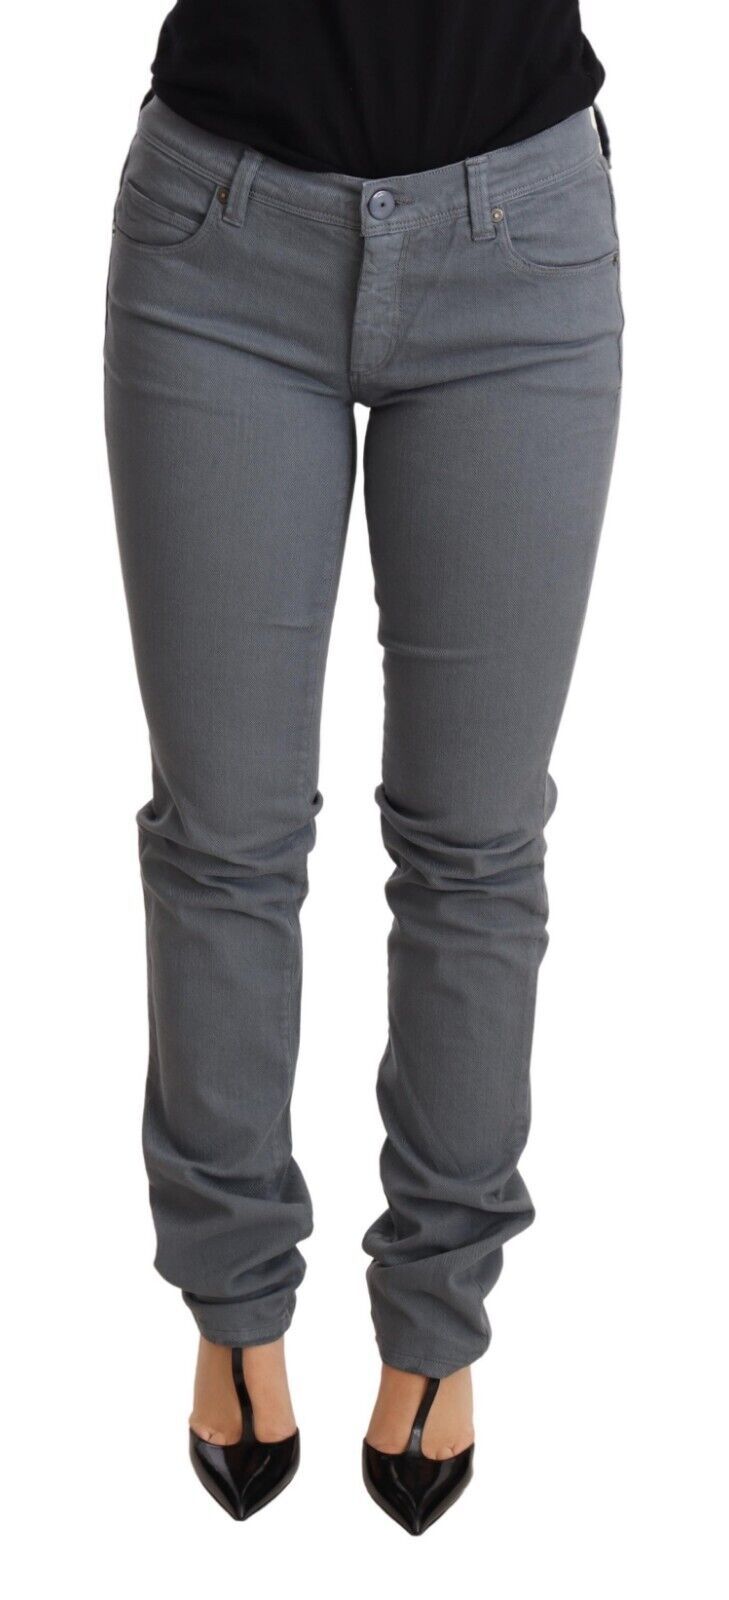 Ermanno Scervino Sleek Gray Low Waist Skinny Women's Jeans